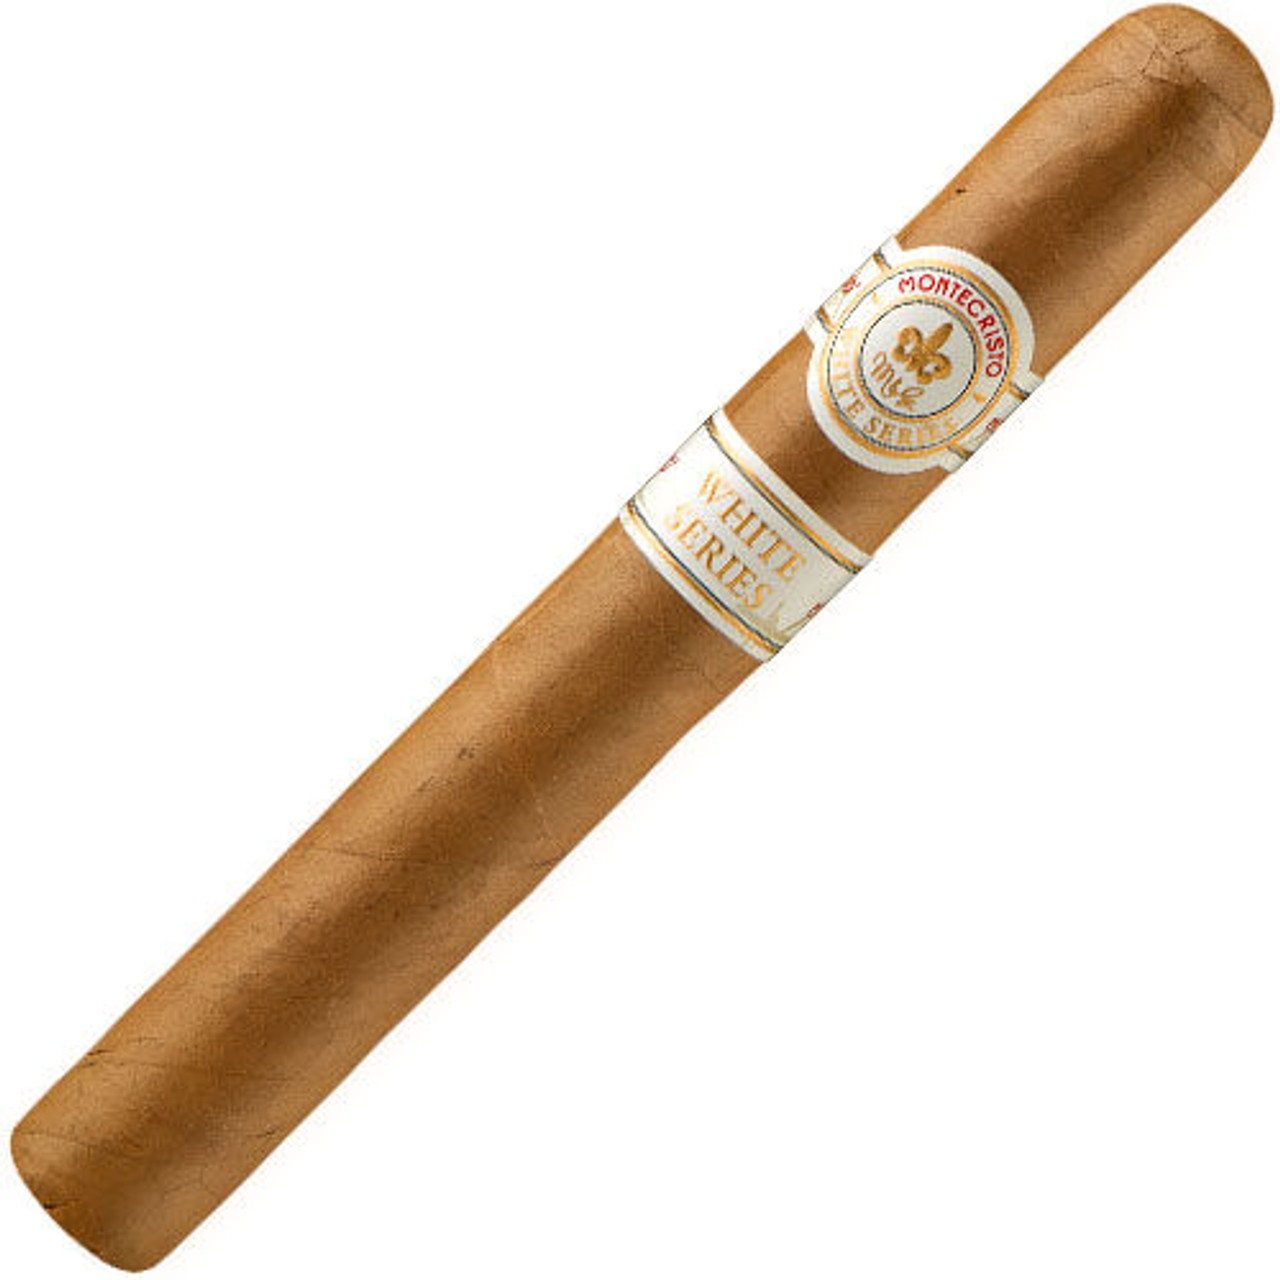 Montecristo White Series No. 3 Especial Cigars - 5.5 x 44 (Pack of 5)